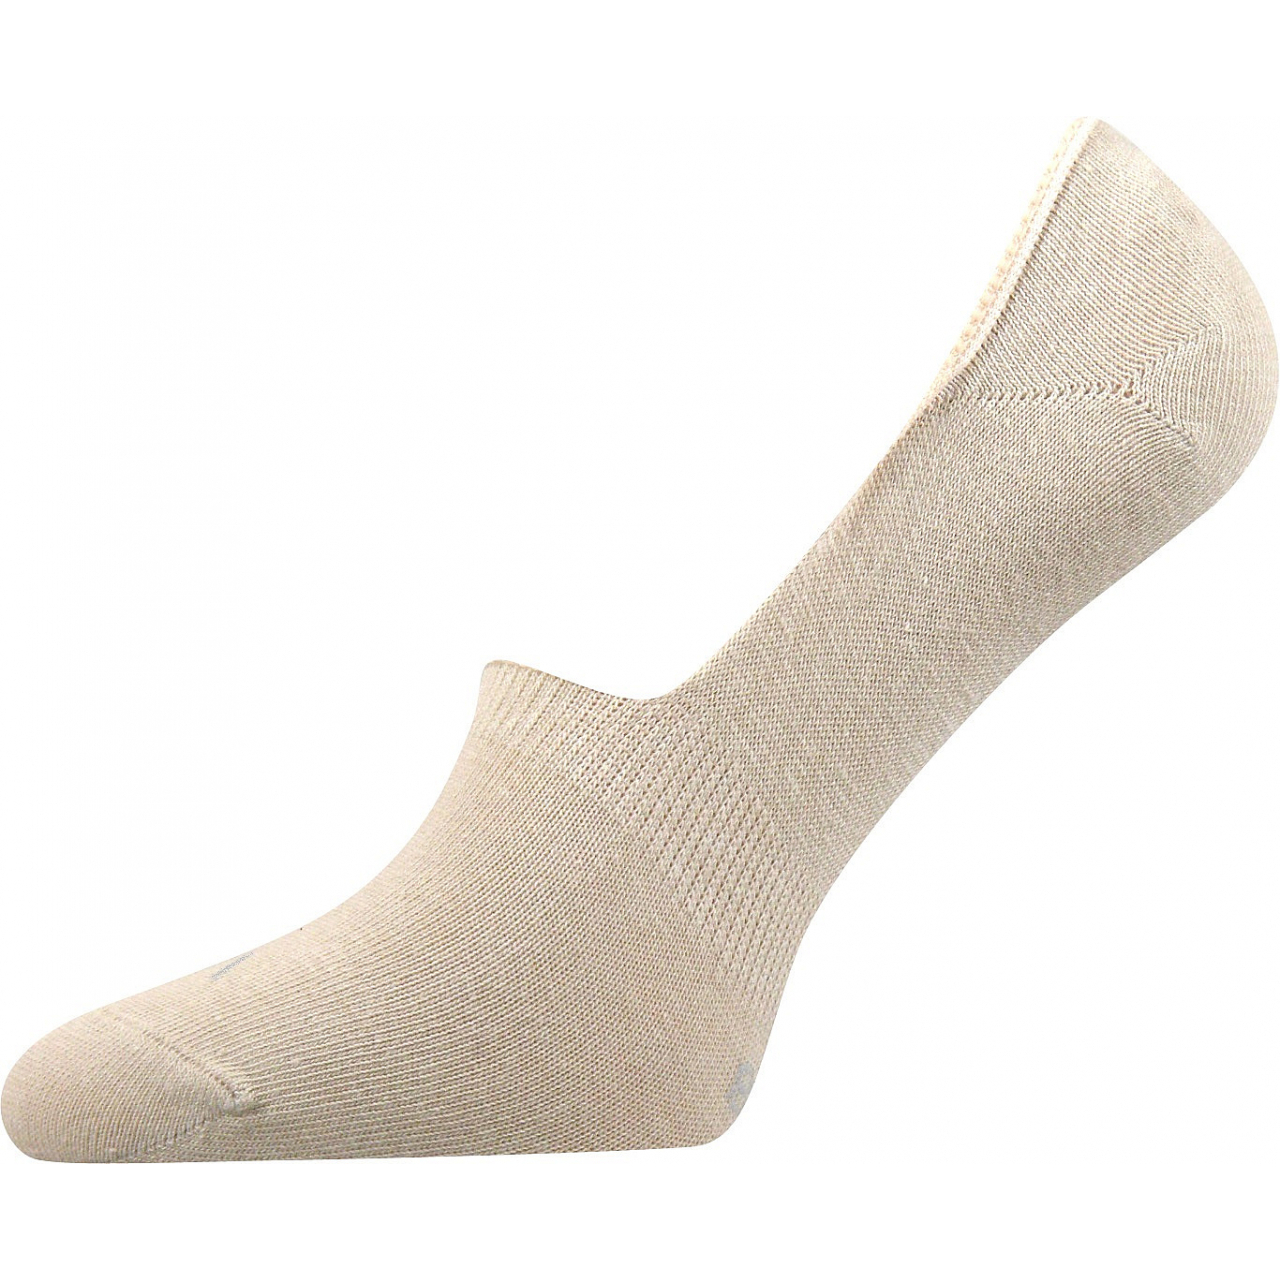 Ponožky unisex Voxx Verti - béžové, 39-42